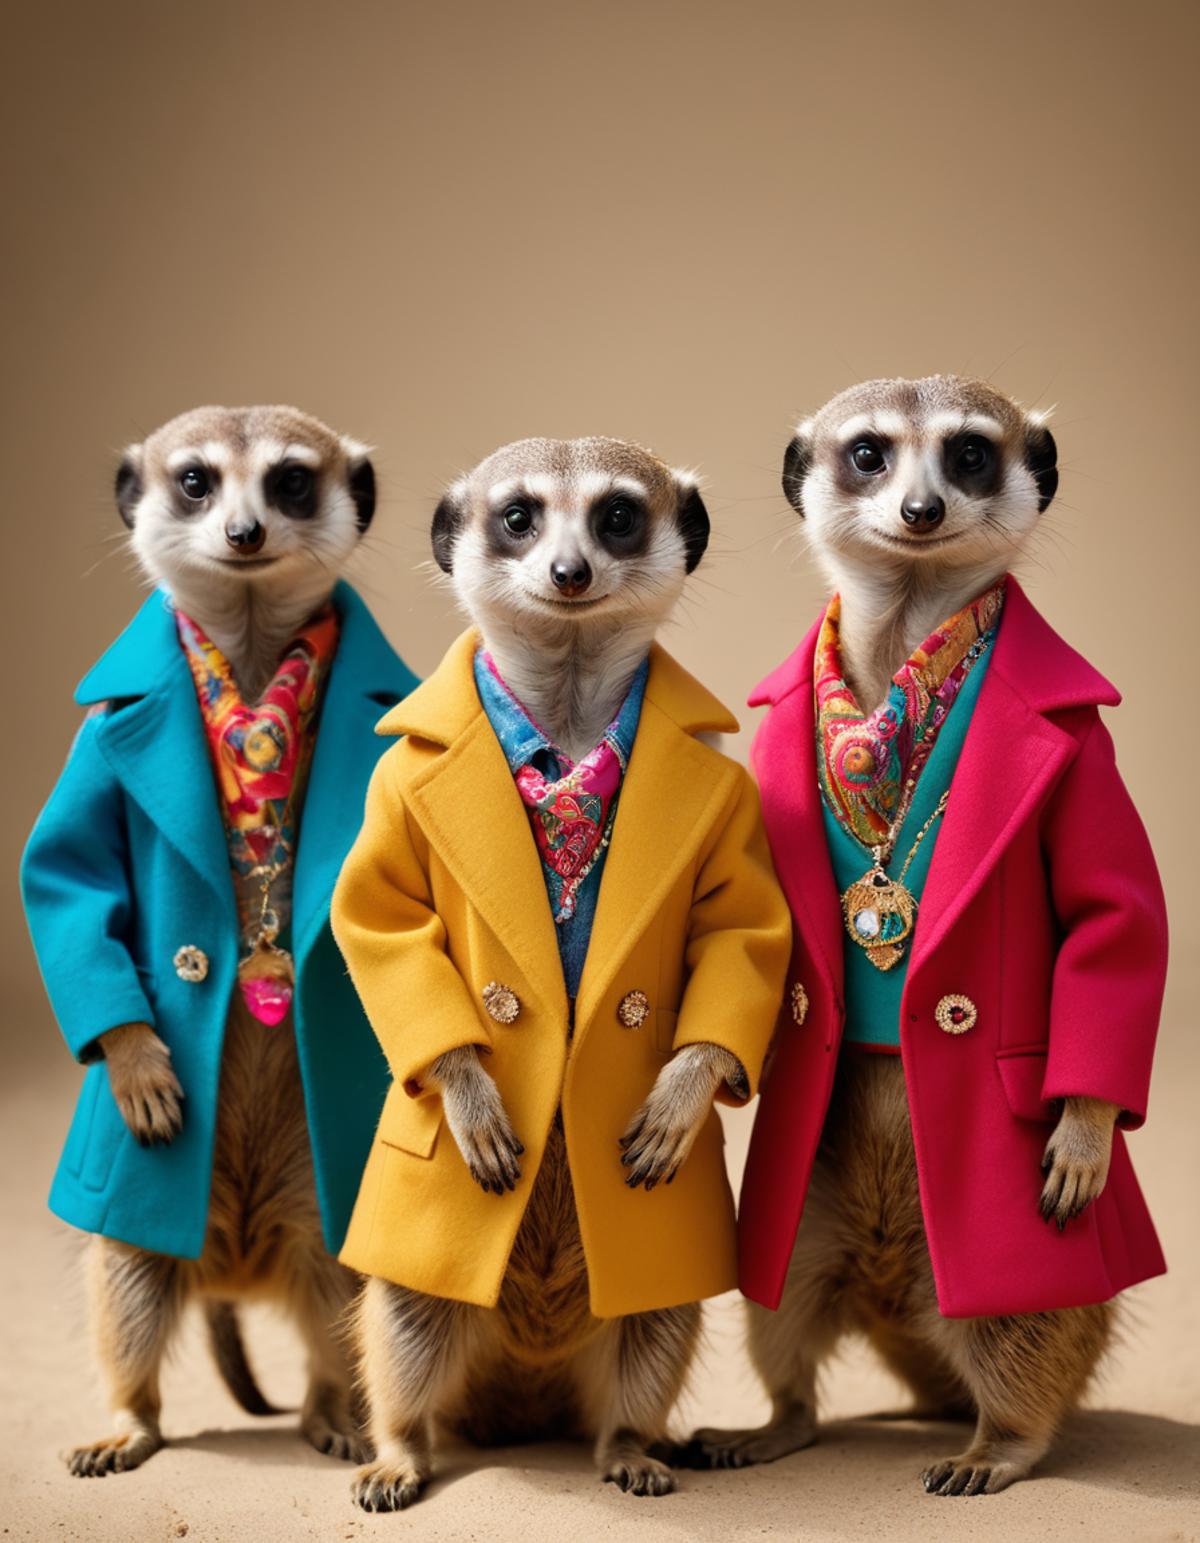 Three Dressed-Up Meerkats Wearing Jackets and Ties